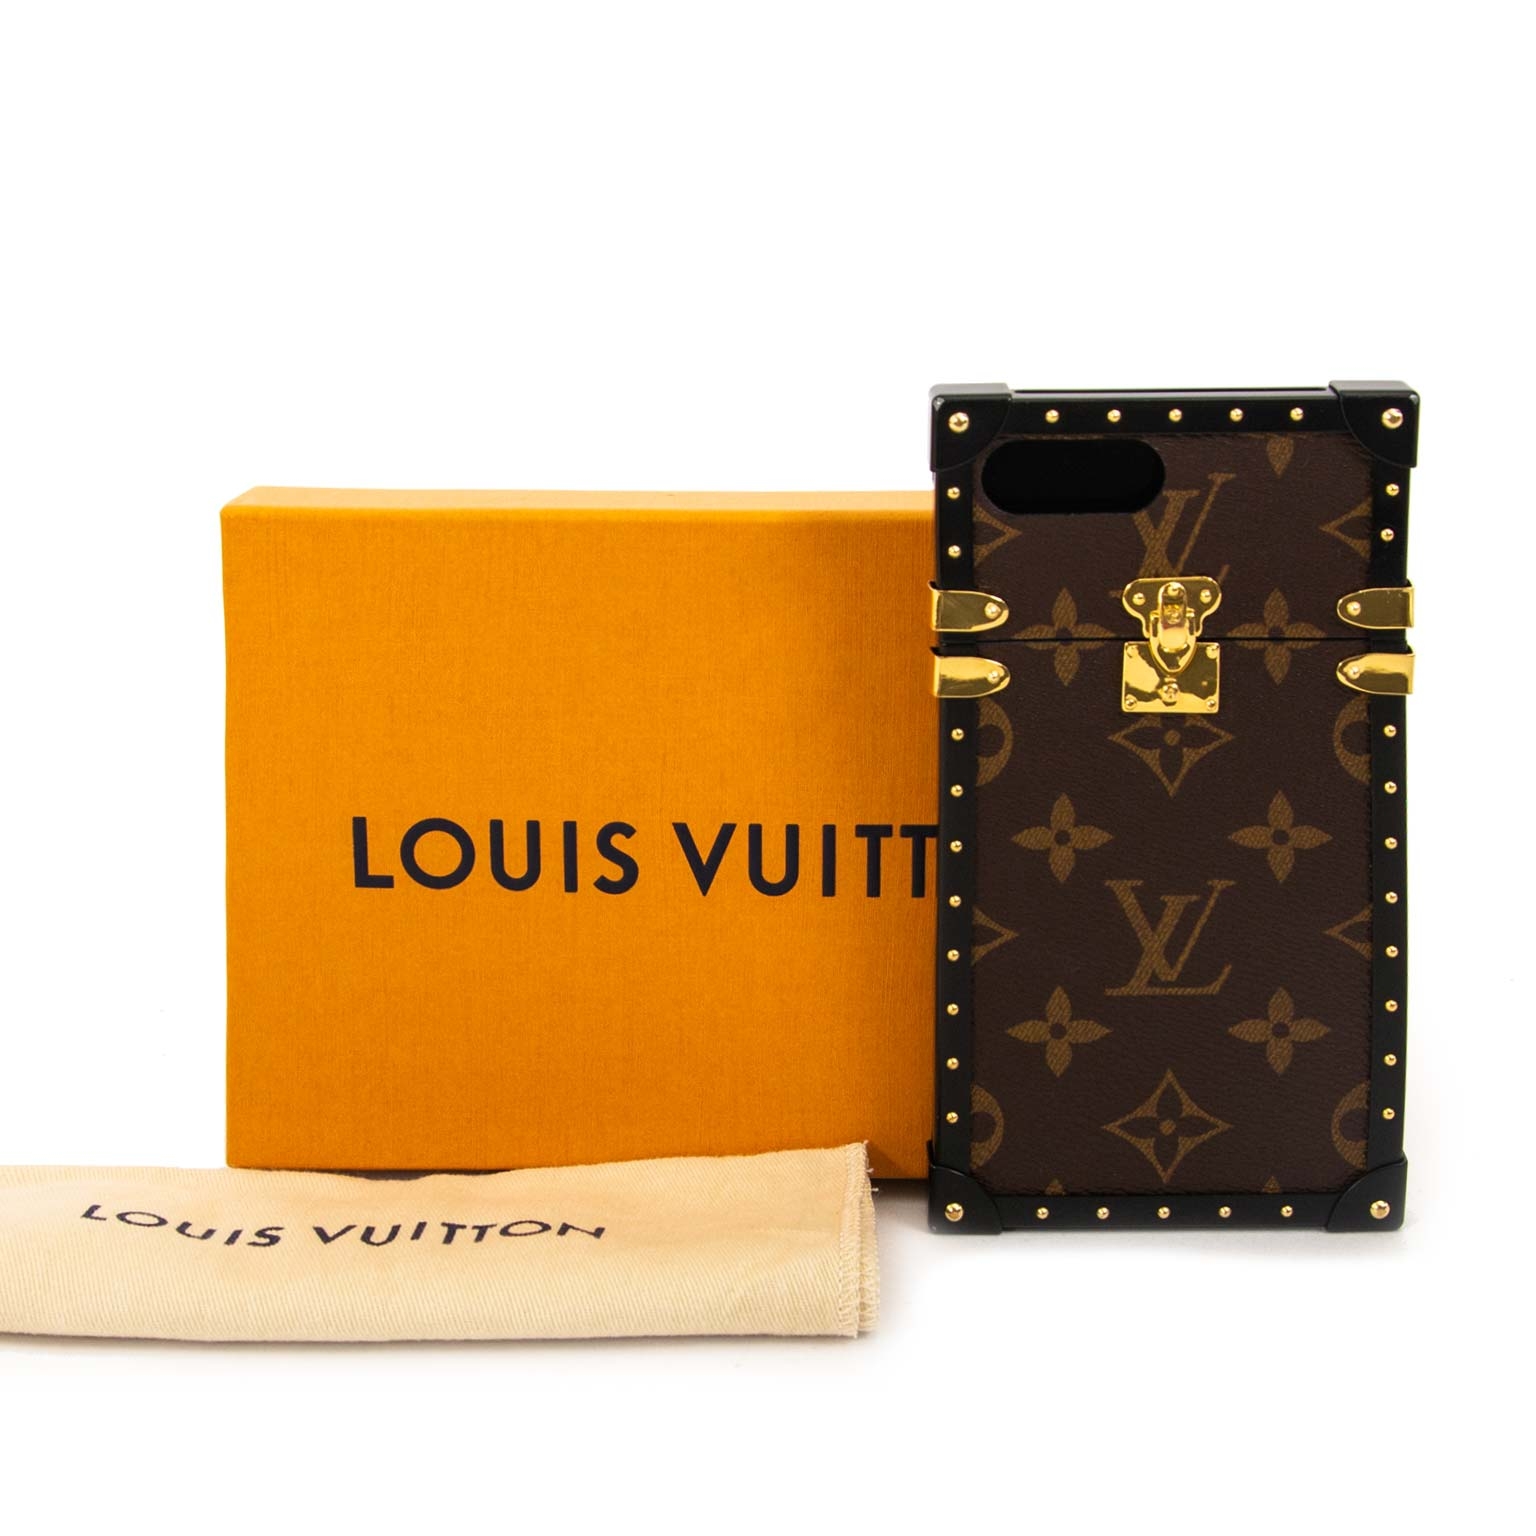 Louis Vuitton Reverse Monogram Canvas Eye Trunk iPhone 7 Plus